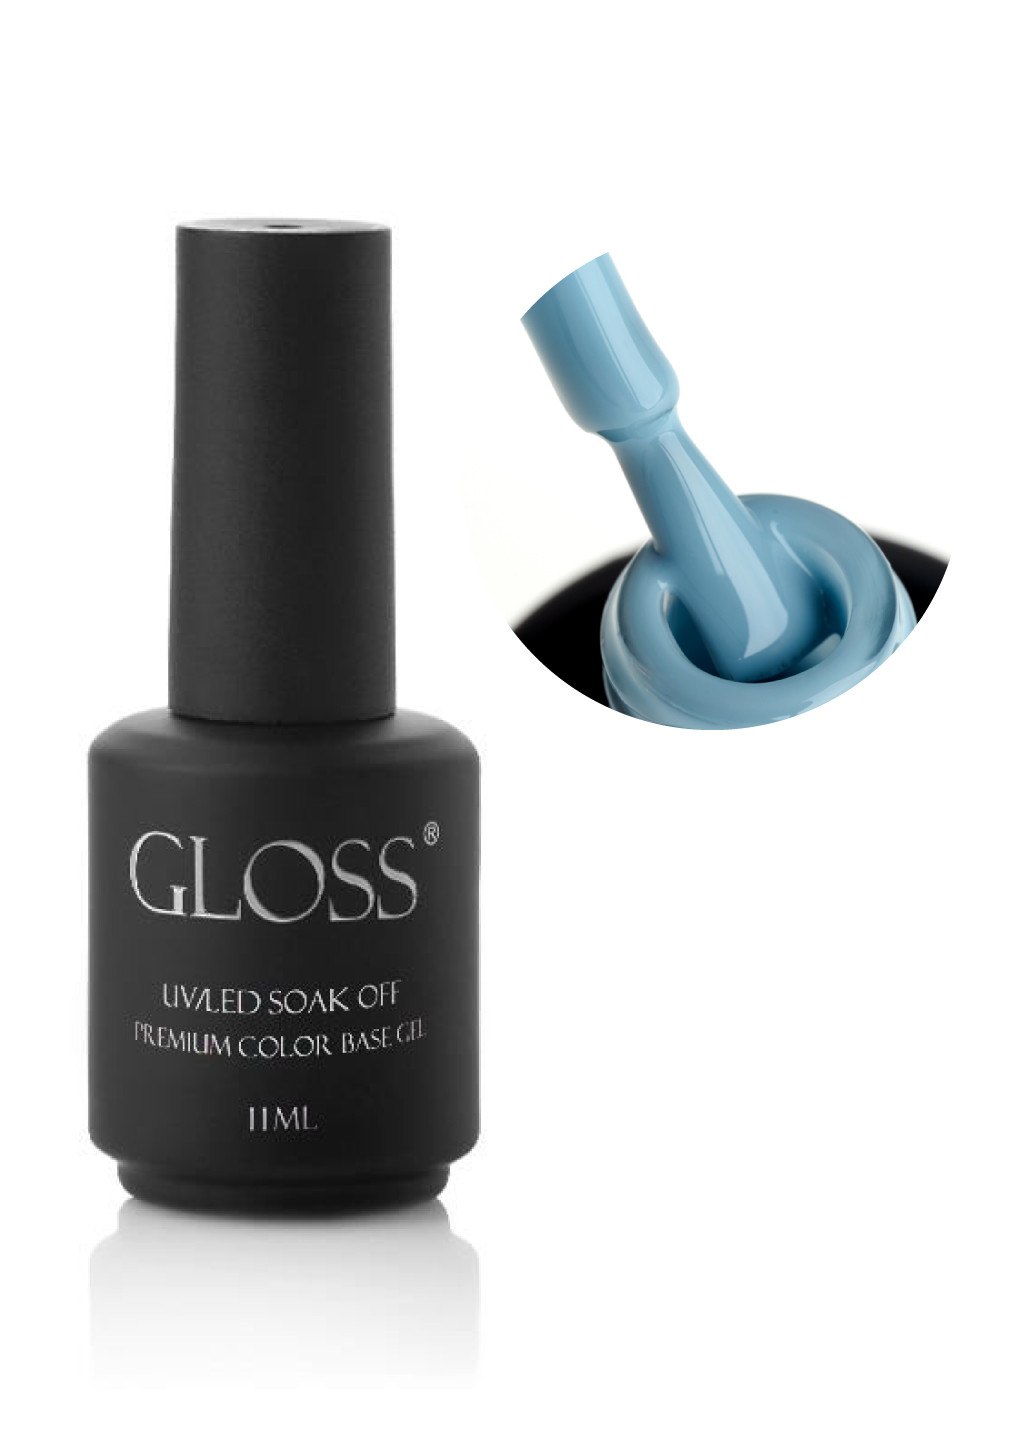 GLOSS Color Base Gel Alaska, 11 мл Gloss Company кольорова база (269119912)